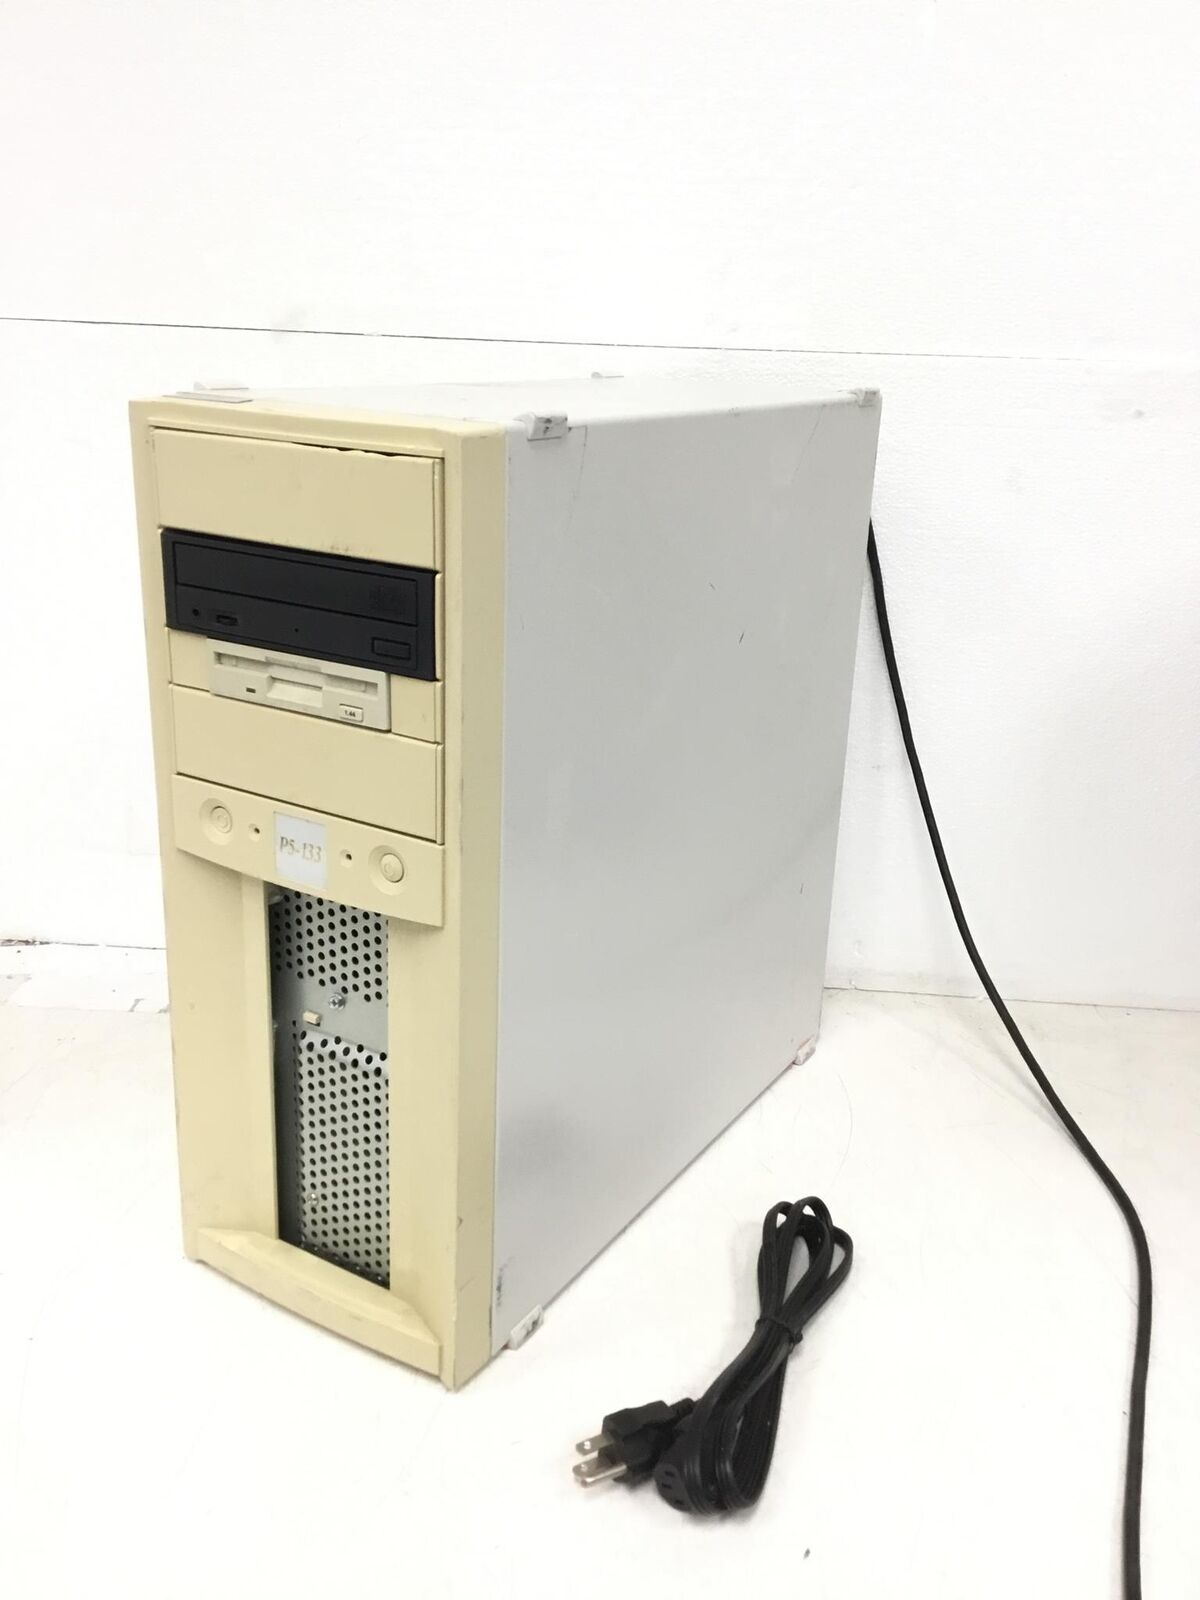 GATEWAY 2000 P5-133 Pentium 200Mhz Computer with 1.44 Floppy Drive/2X Hard Drive